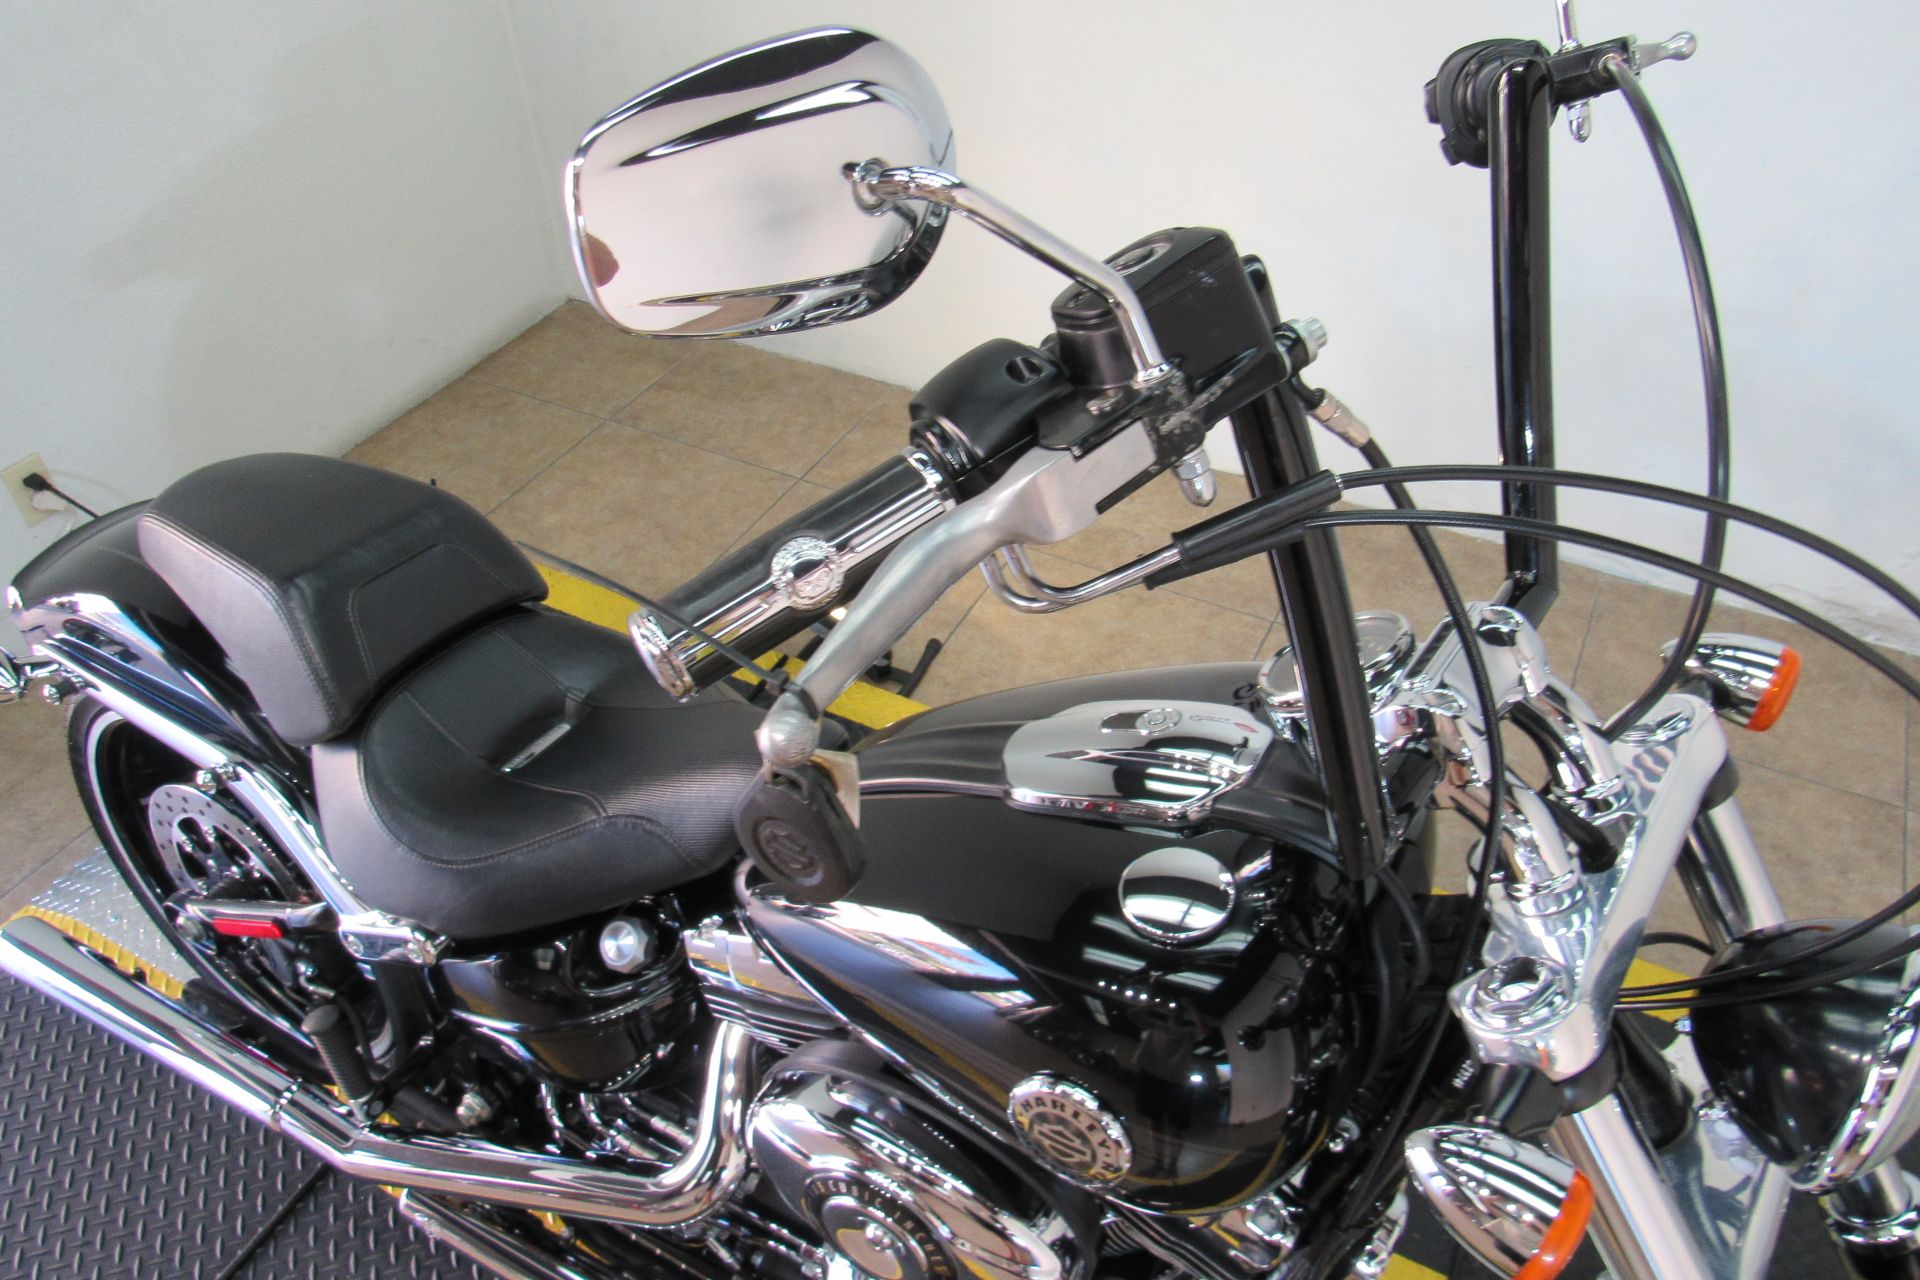 2014 Harley-Davidson Breakout® in Temecula, California - Photo 23